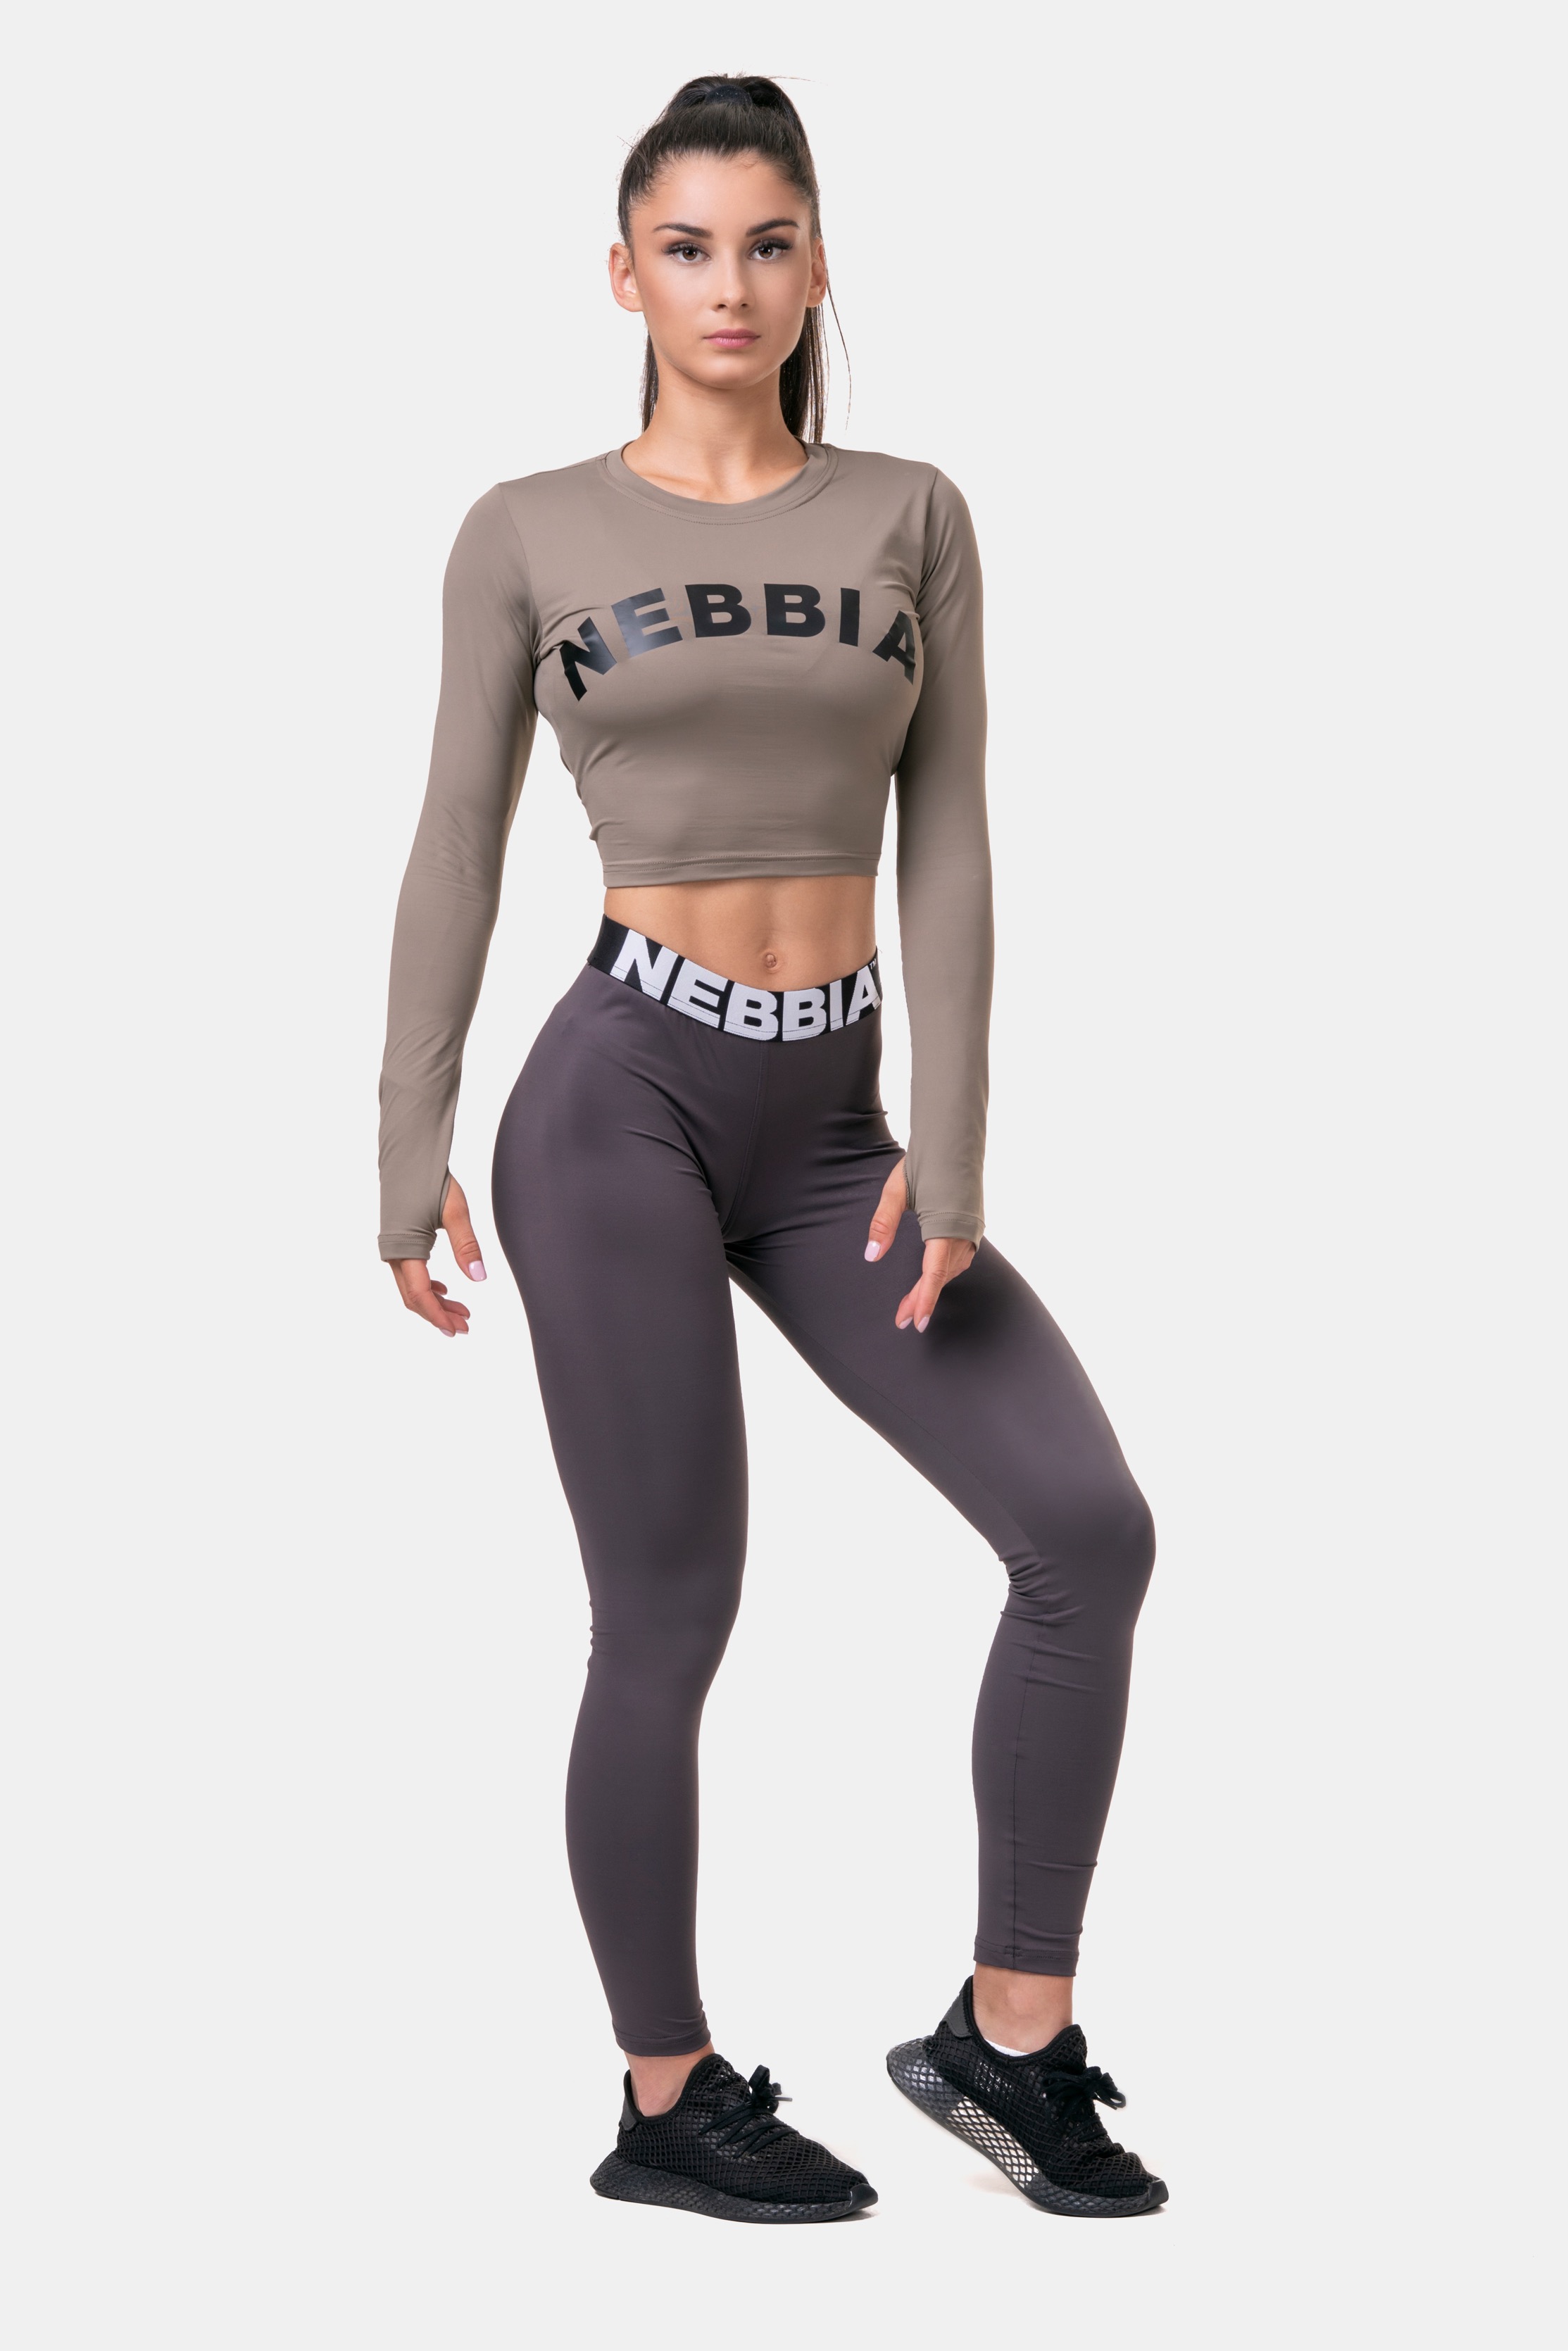 nebbia-squat-hero-scrunch-butt-edzo-leggings-571-marron